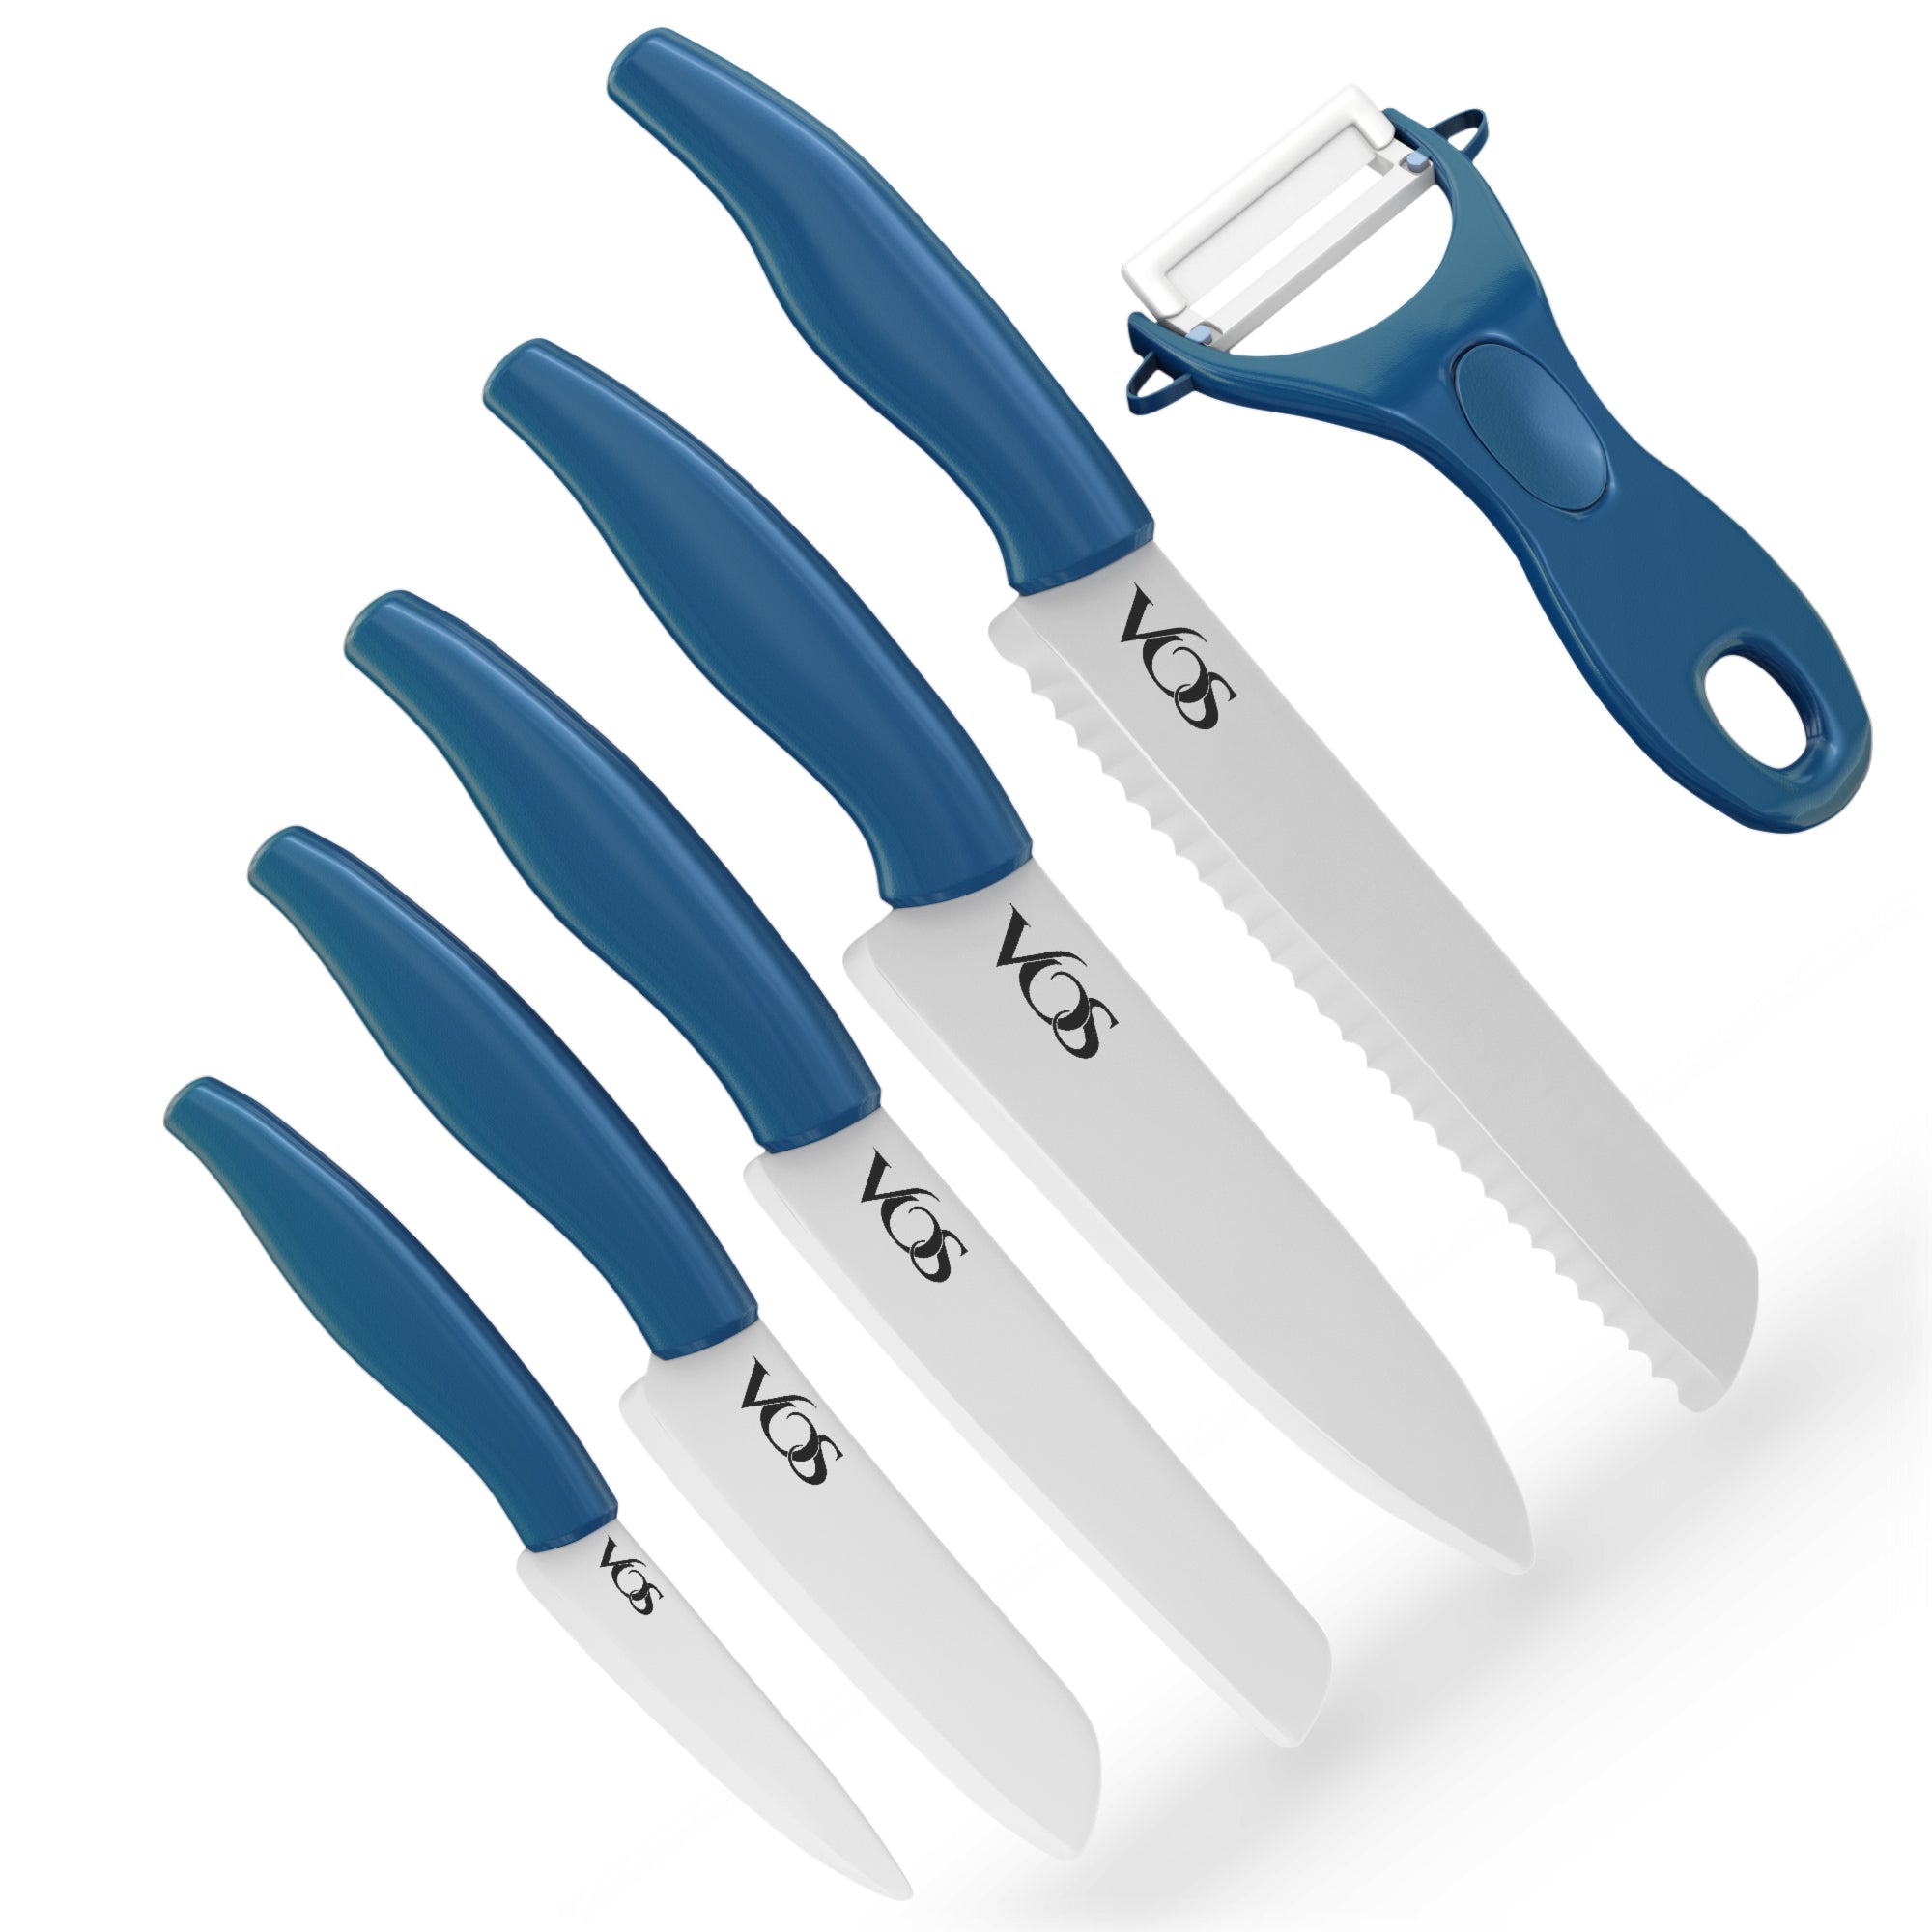 5 Inch Ceramic Kitchen Knife - Blue – Rocknife